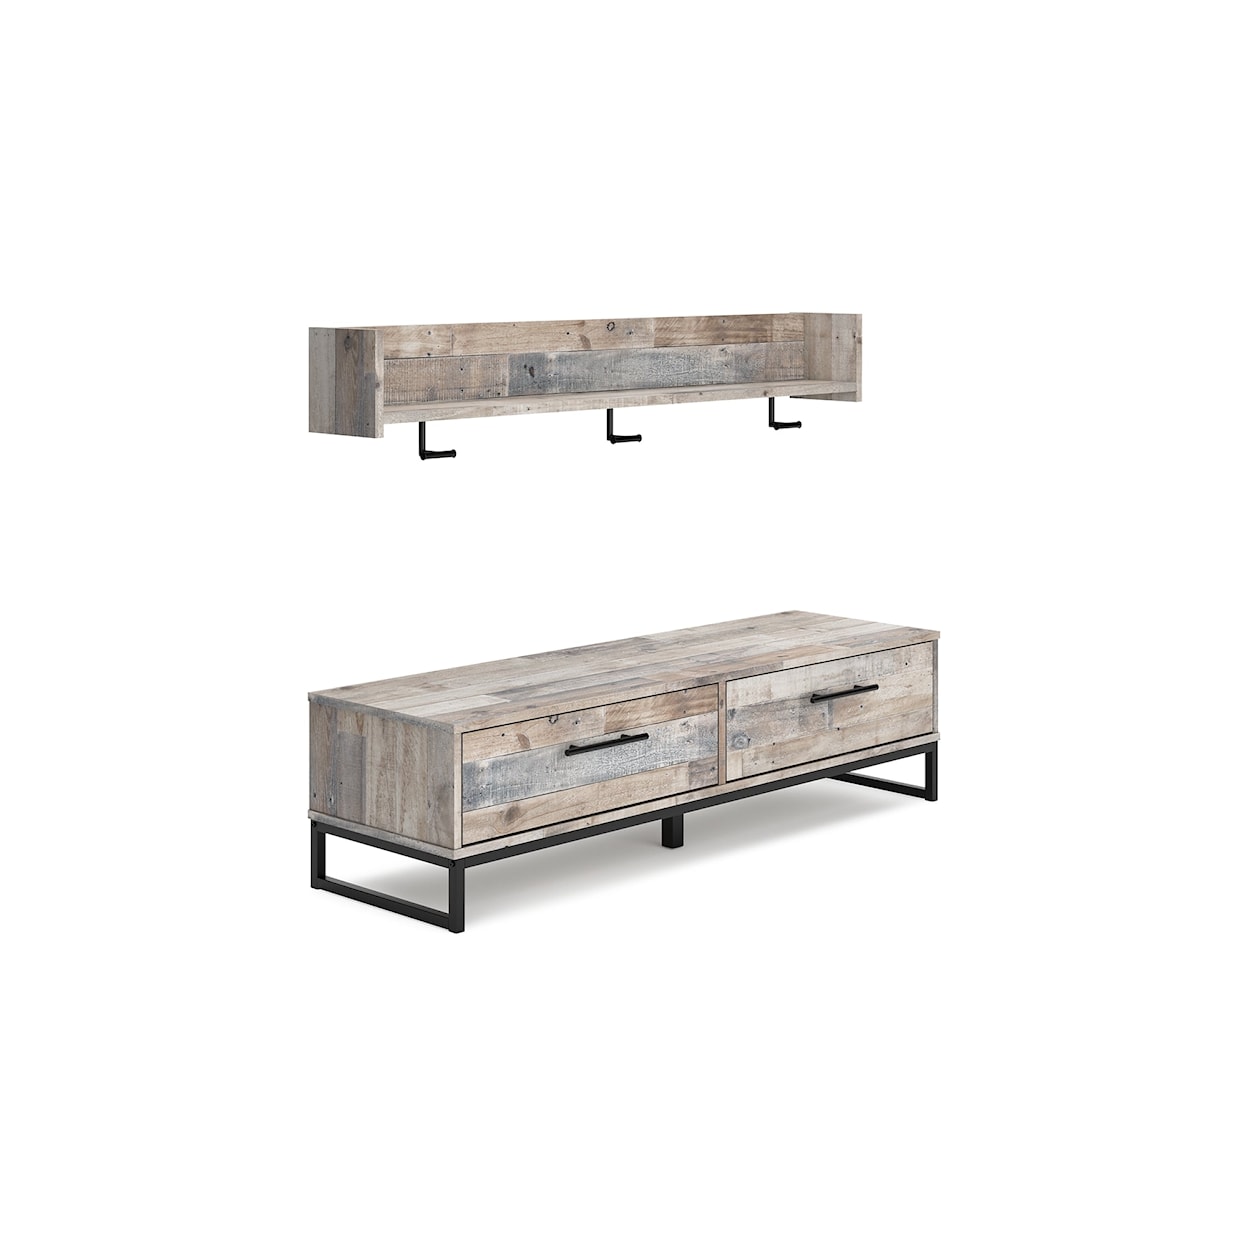 Ashley Furniture Signature Design Neilsville Bench with Coat Rack